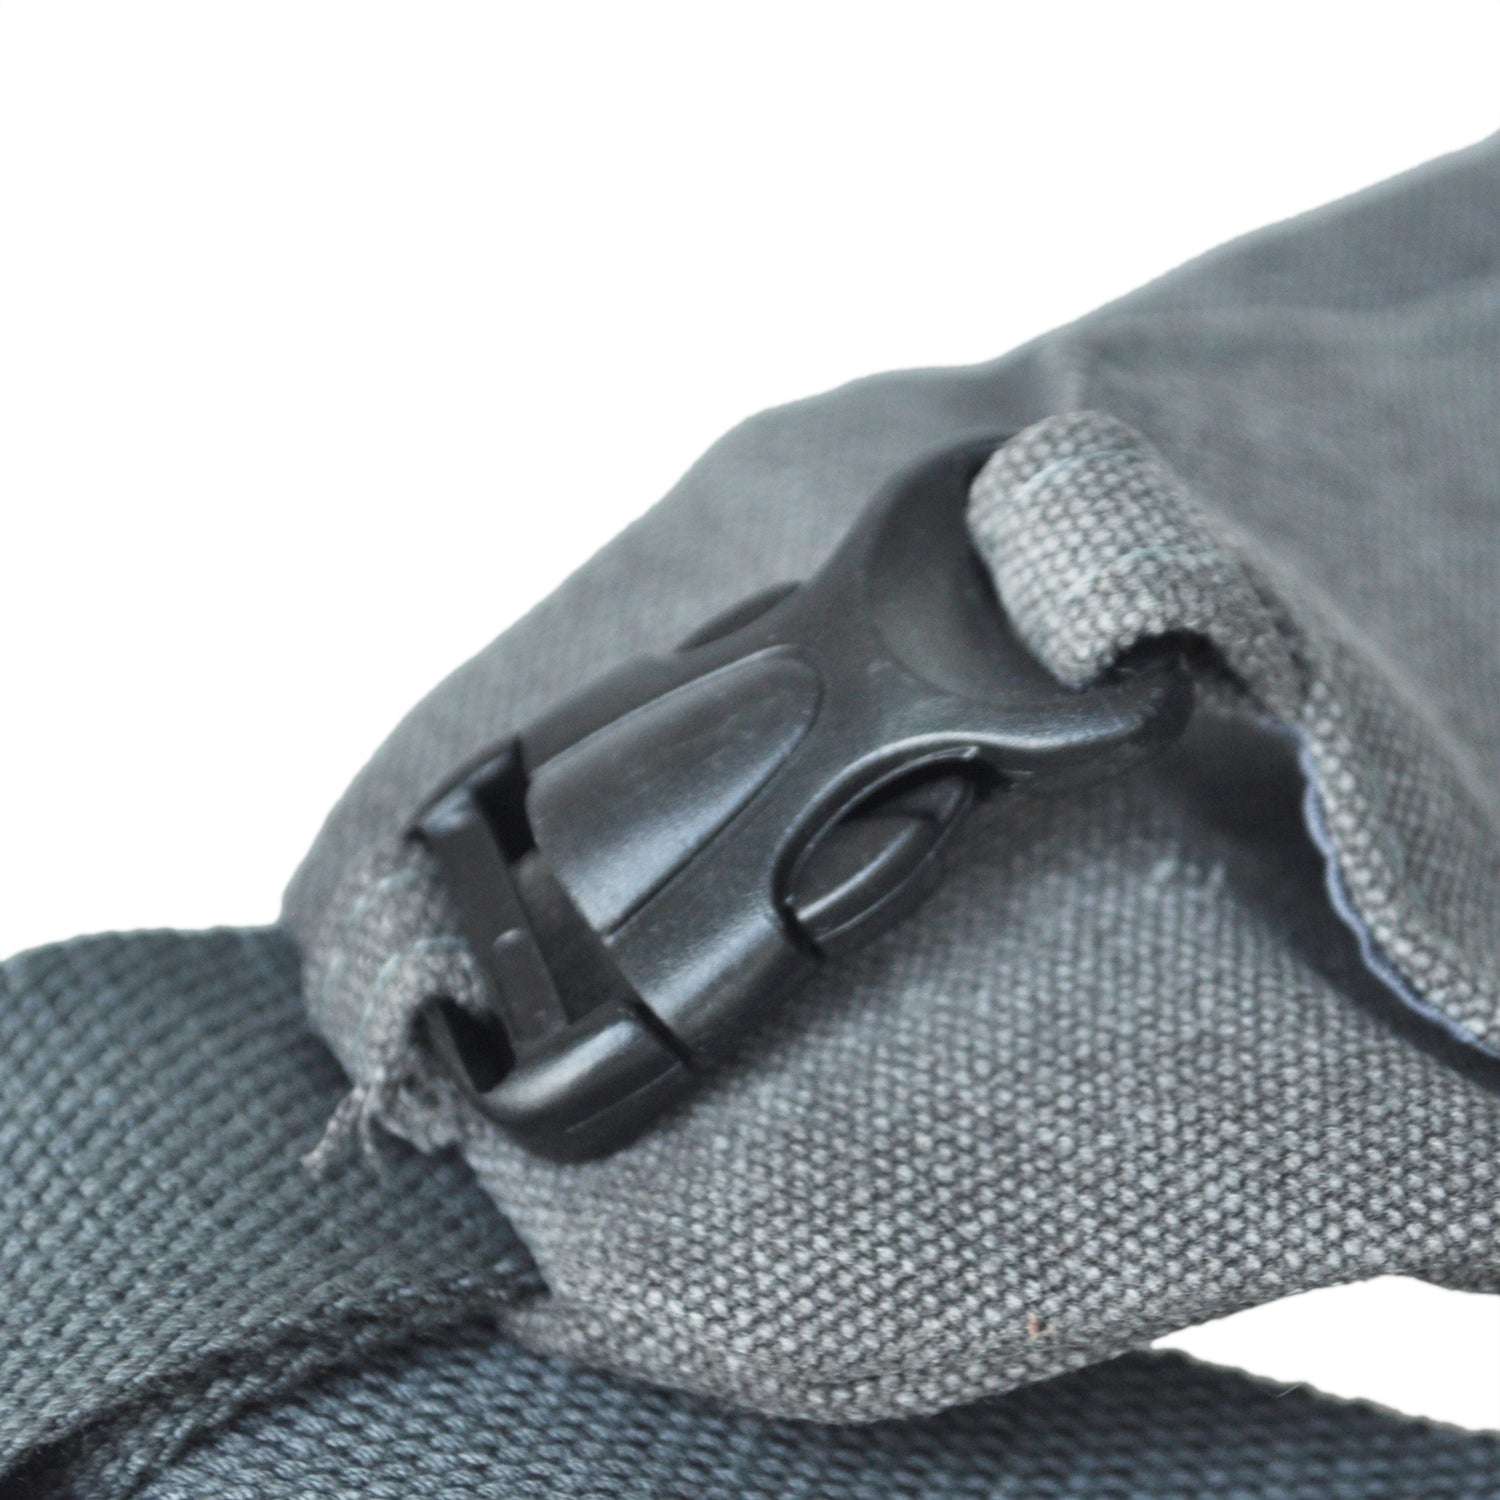 Flrsh Men's Canvas Unbalance Backpack Shoulder Sling Chest/ Bicycle Bag Grey - ebowsos